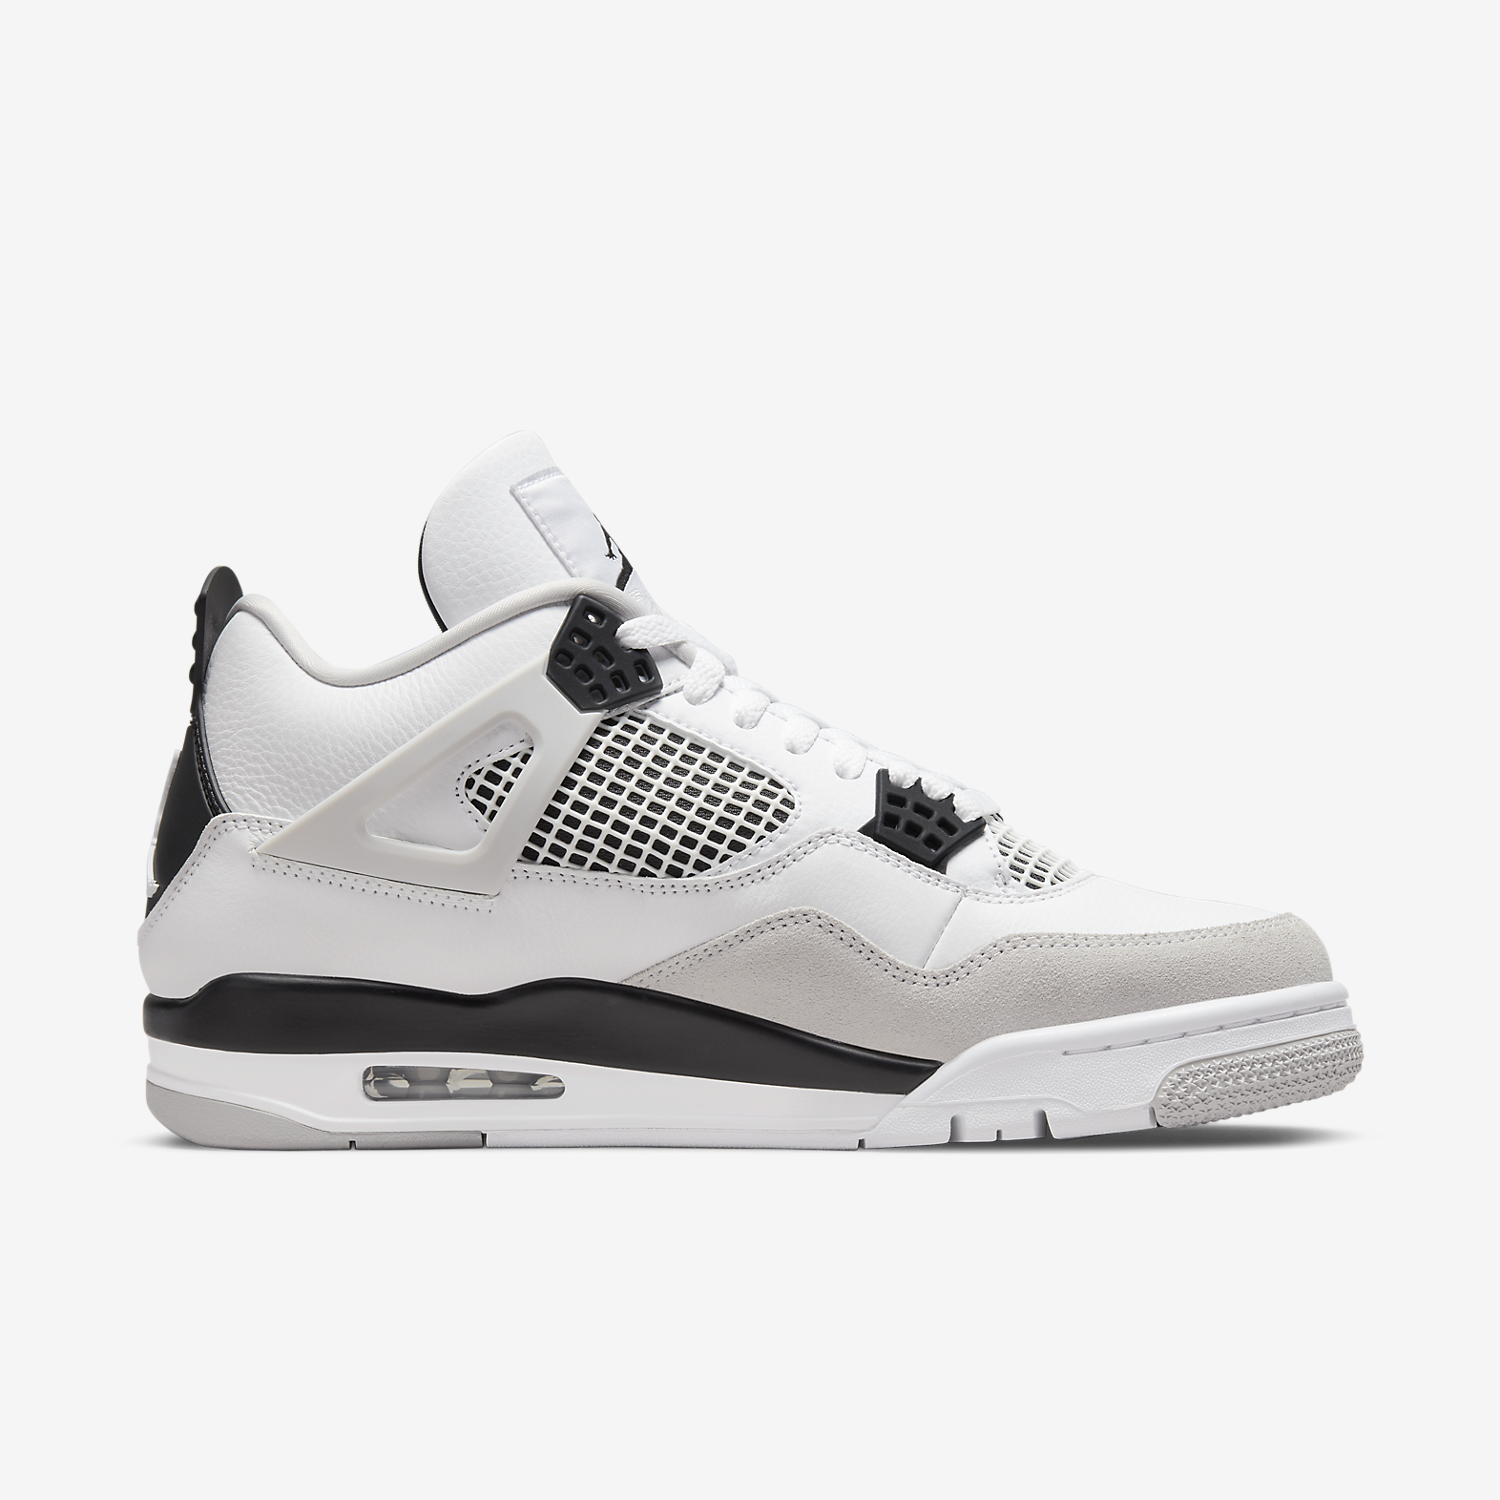 Sneaker Drop — Air Jordan Retro 4 'White / Black'